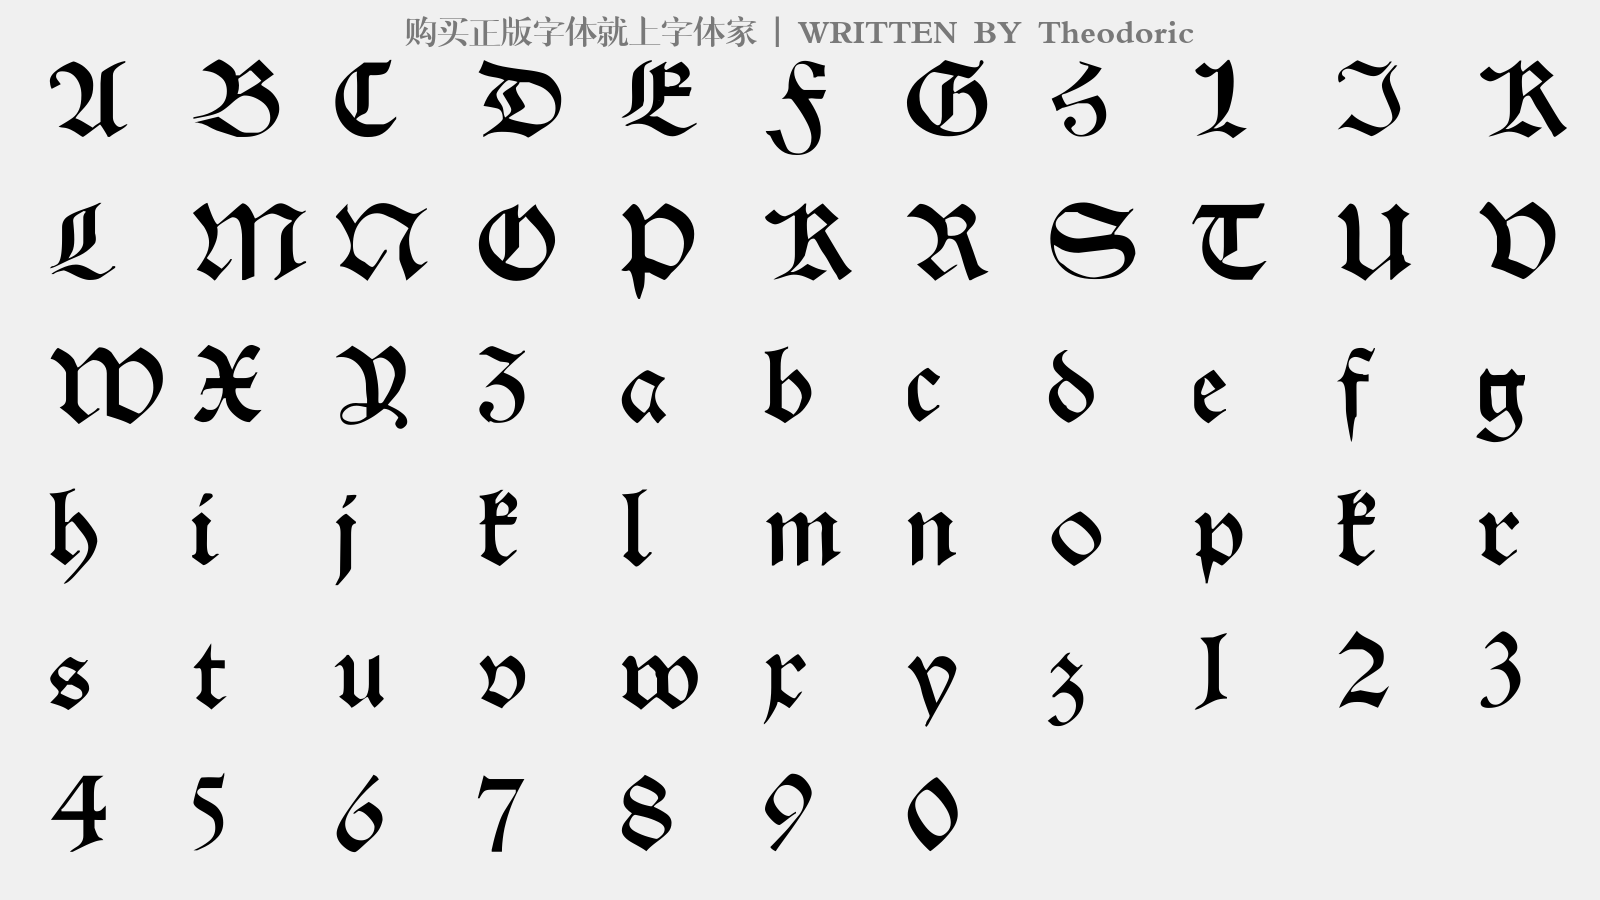 Theodoric - 大写字母/小写字母/数字